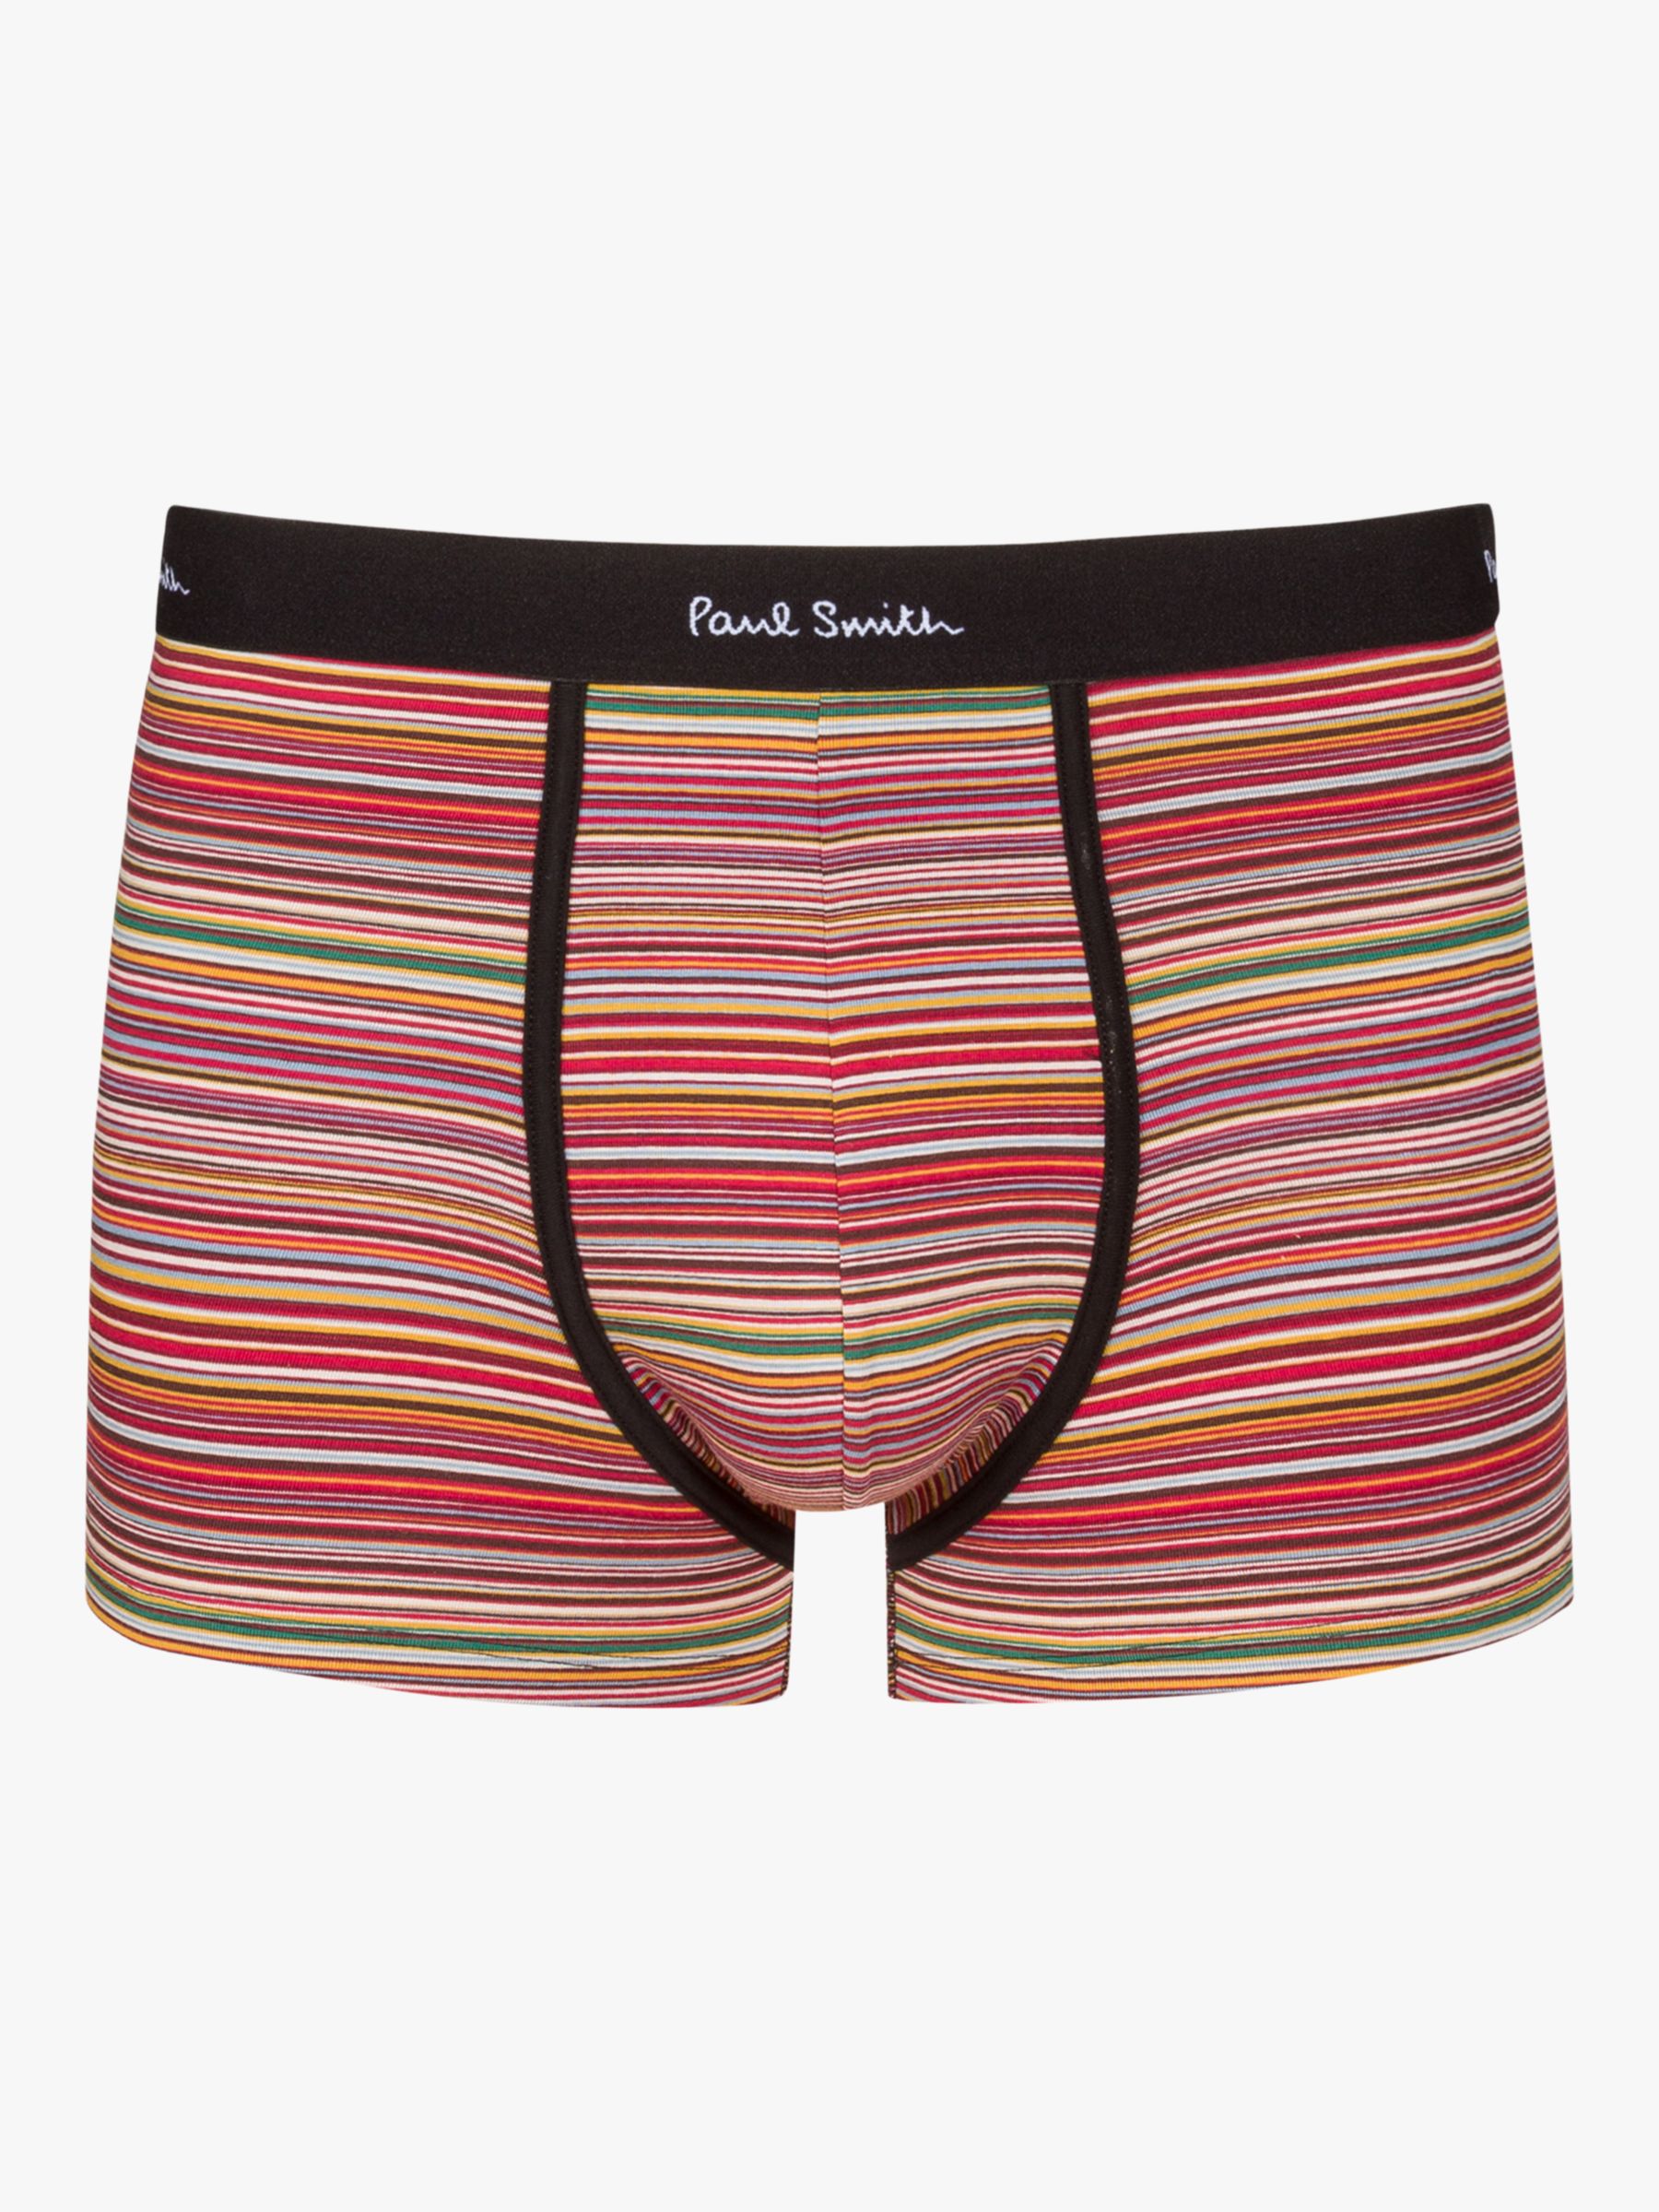 Paul Smith Organic Cotton Stripe, Spot & Plain Trunks, Pack of 3, Multi, XL